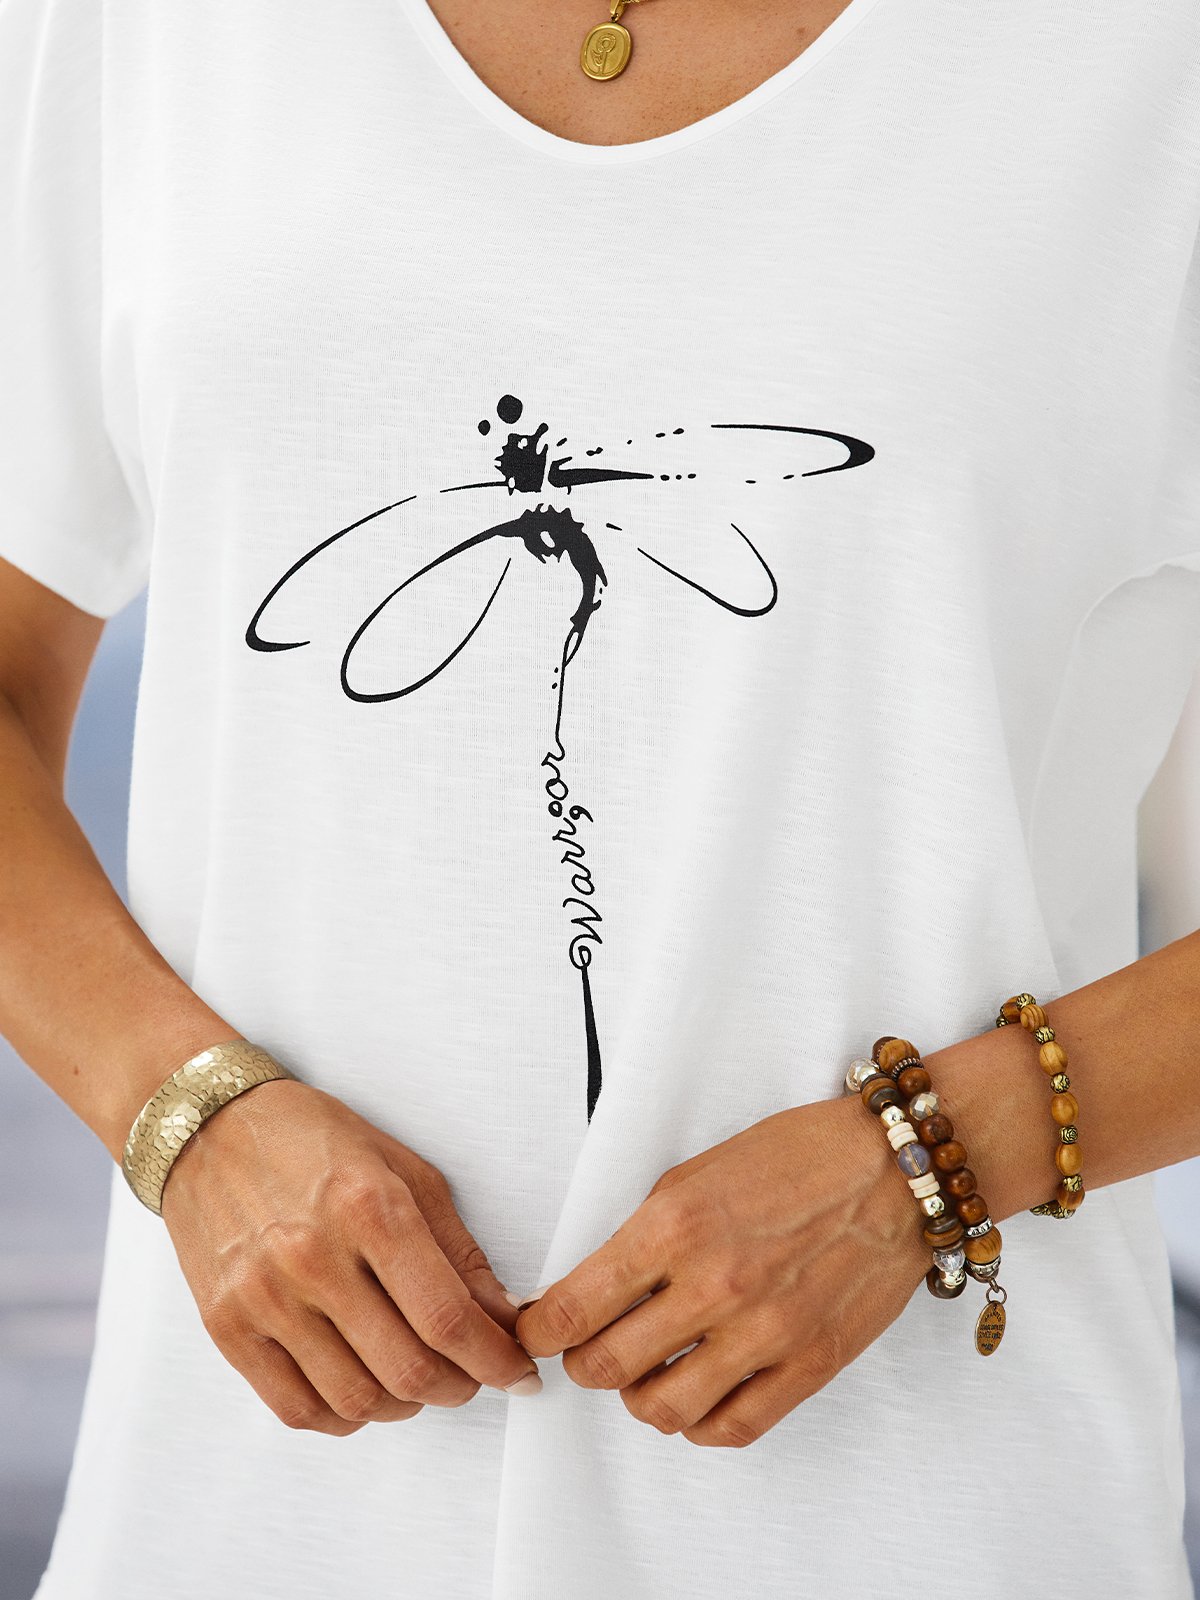 Dragonfly Short sleeve V neck Casual T-Shirt